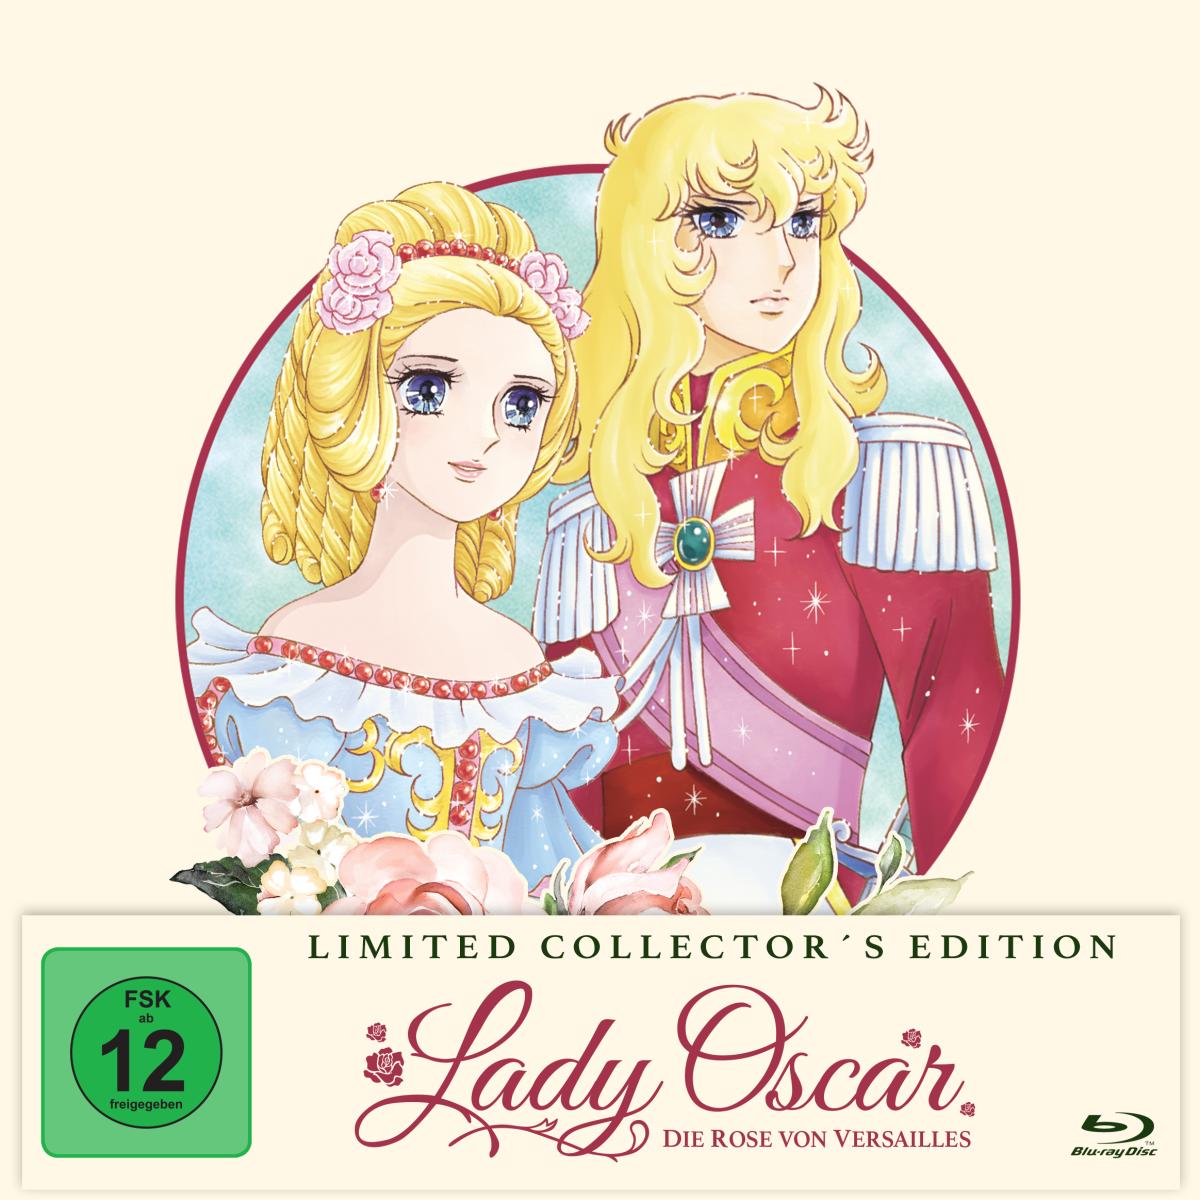 Lady Oscar - Die Rose von Versailles - Limited Collector's Edition [Blu-ray]